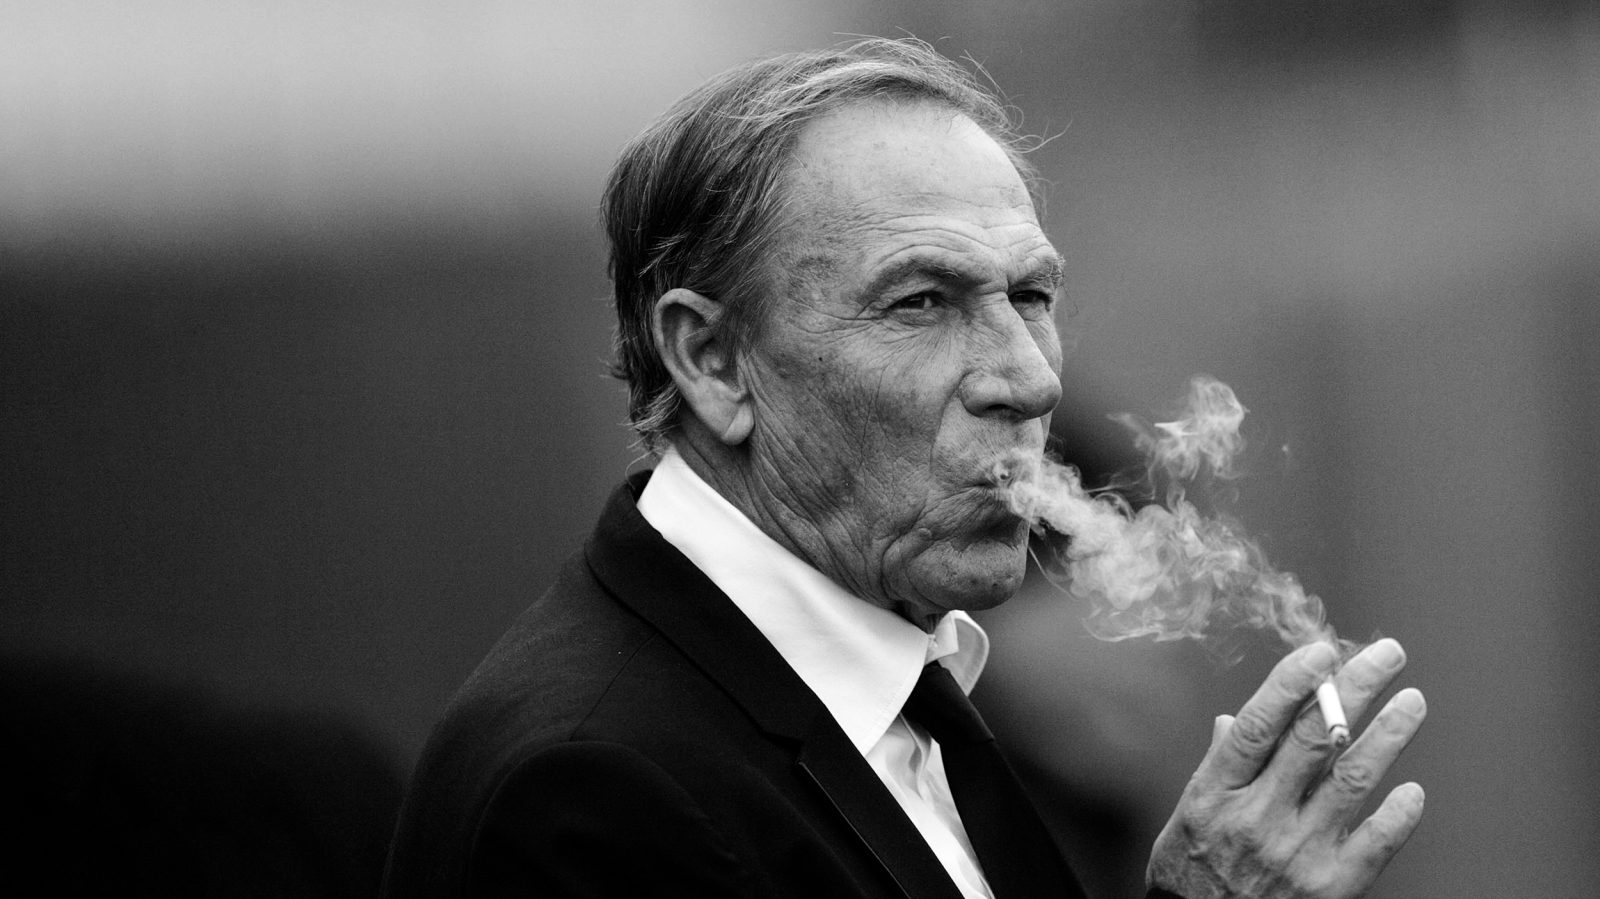 Tränaren Zdenek Zeman röker en cigarett under en match i Italien